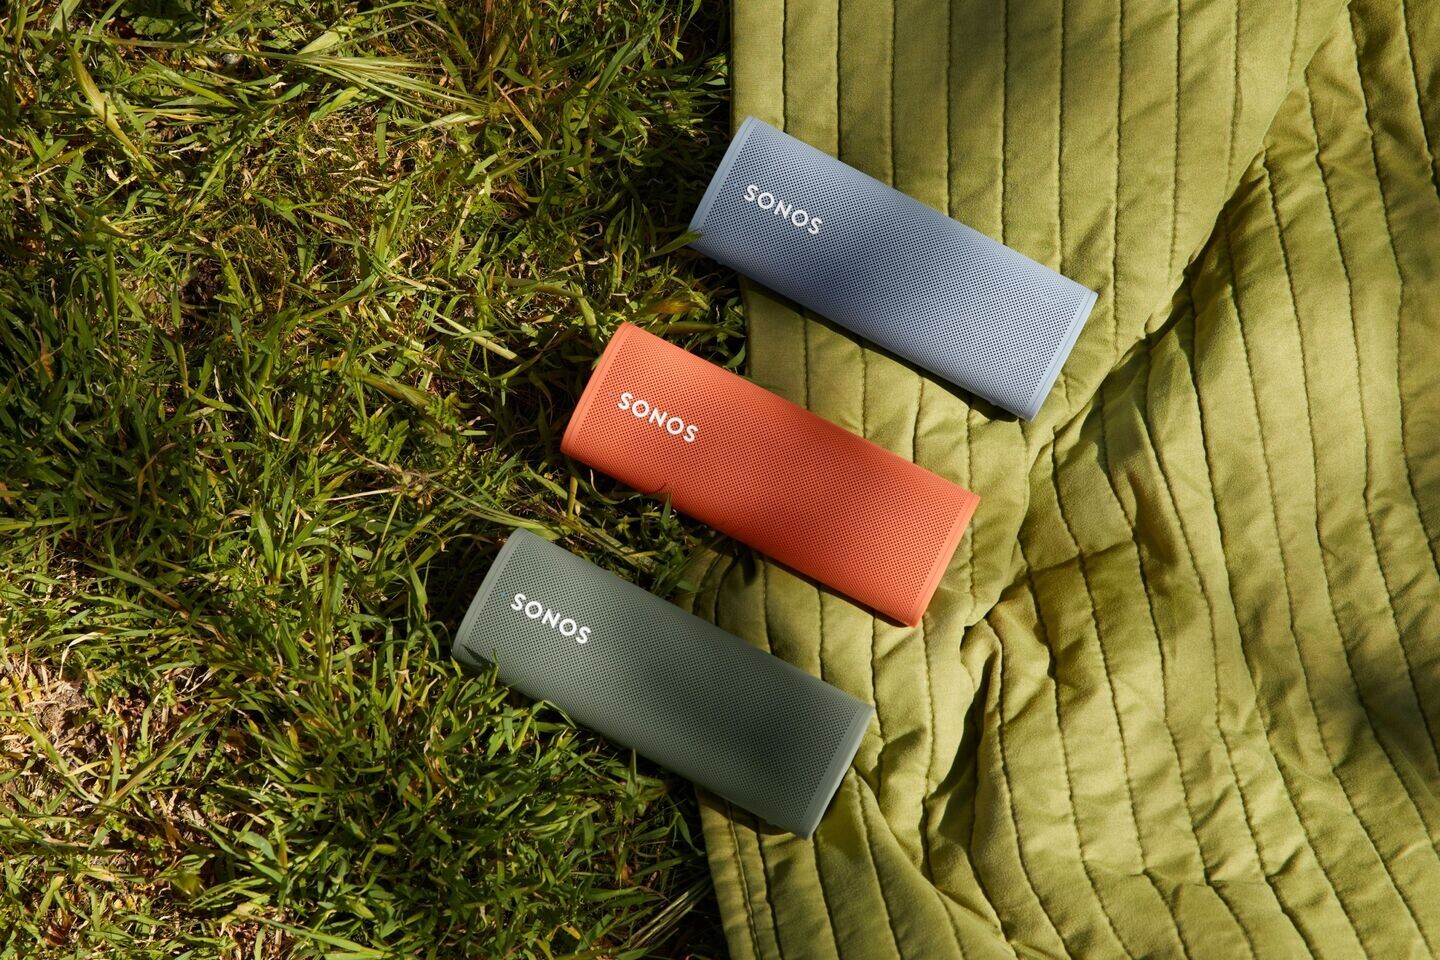 Sonos Announces Ray Compact Soundbar & Introduces New Colors for Sonos